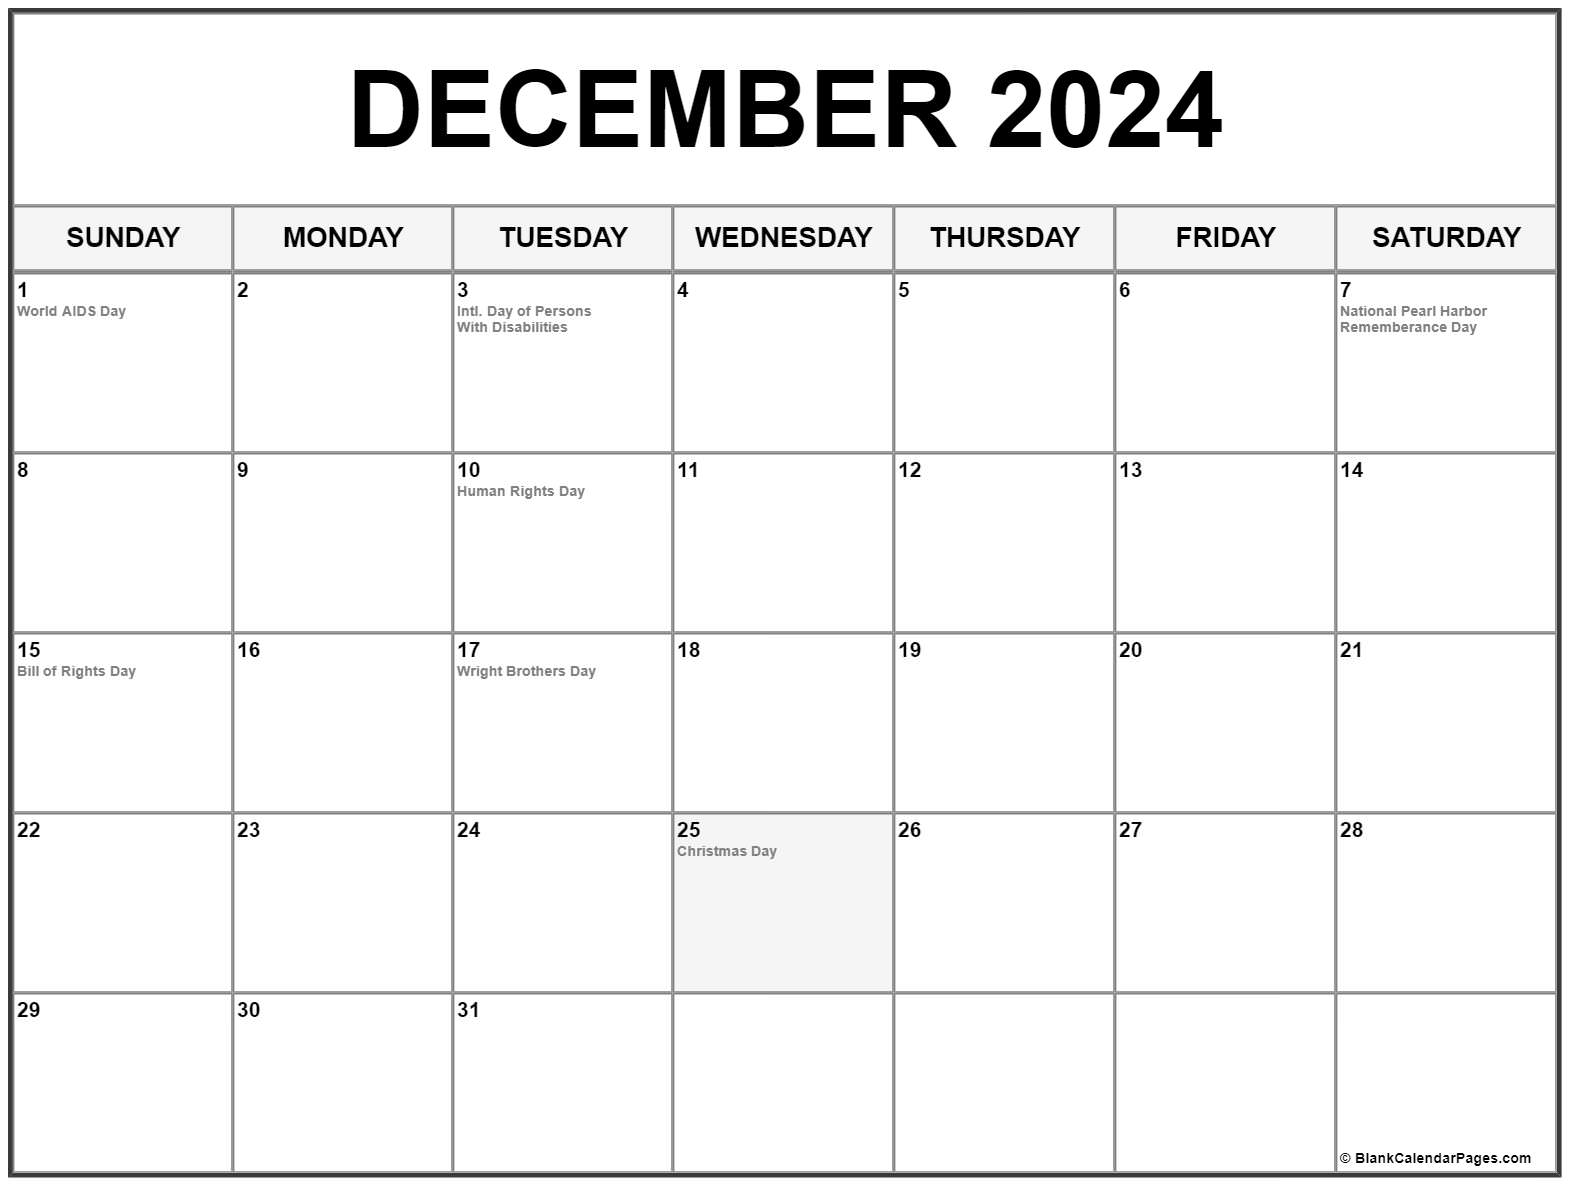 December 2022 Calendar Holidays December 2022 With Holidays Calendar